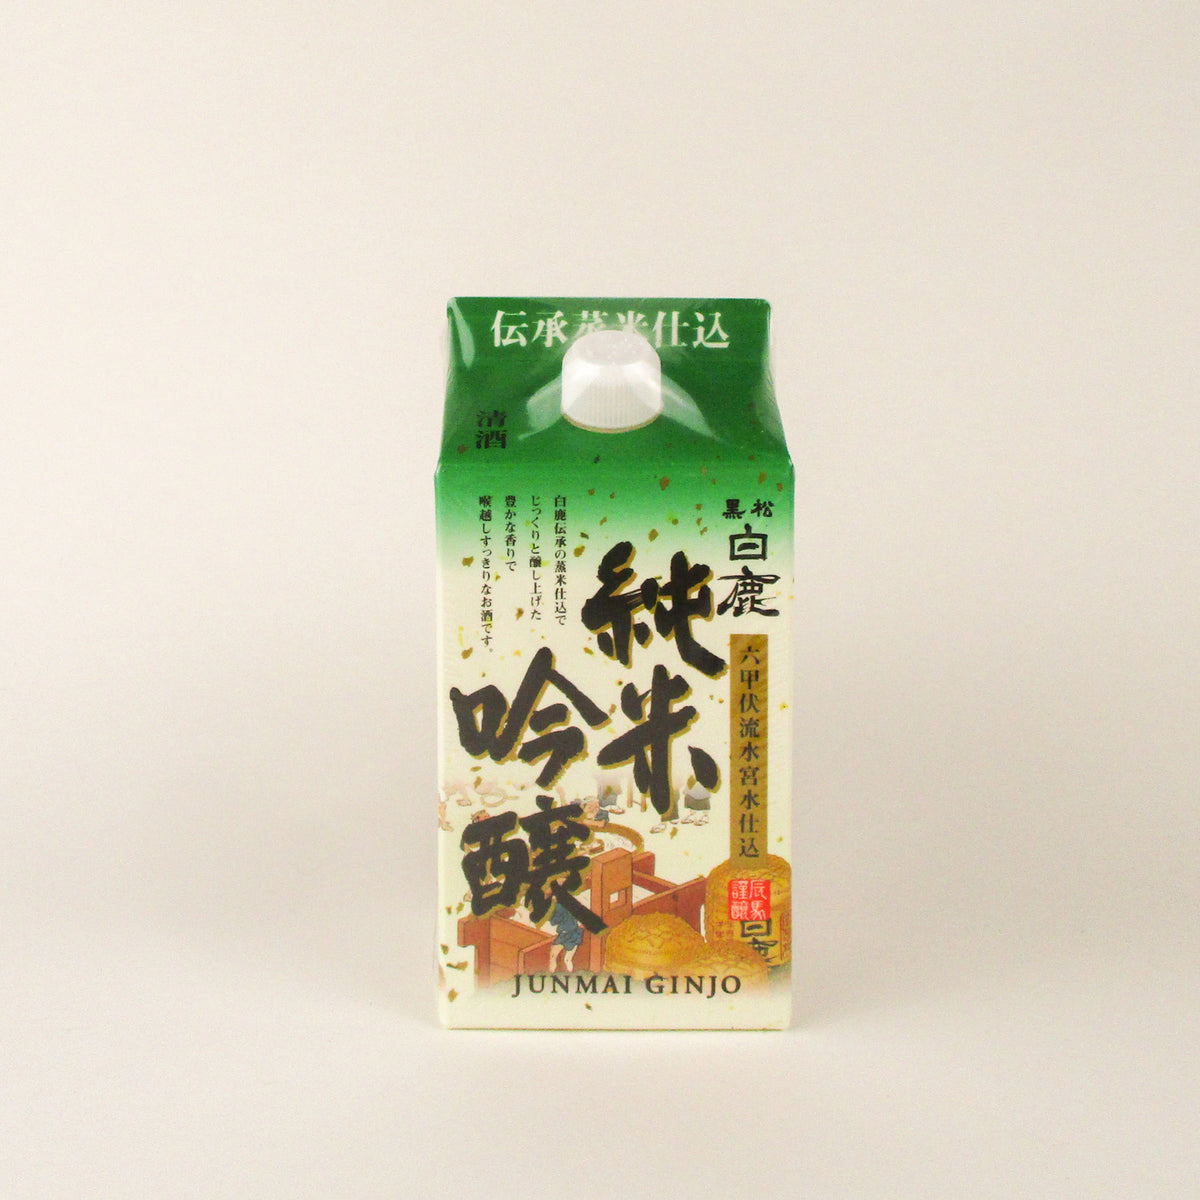 <!--3800--!>Hakushika Junmai Ginjo - 900ml Carton